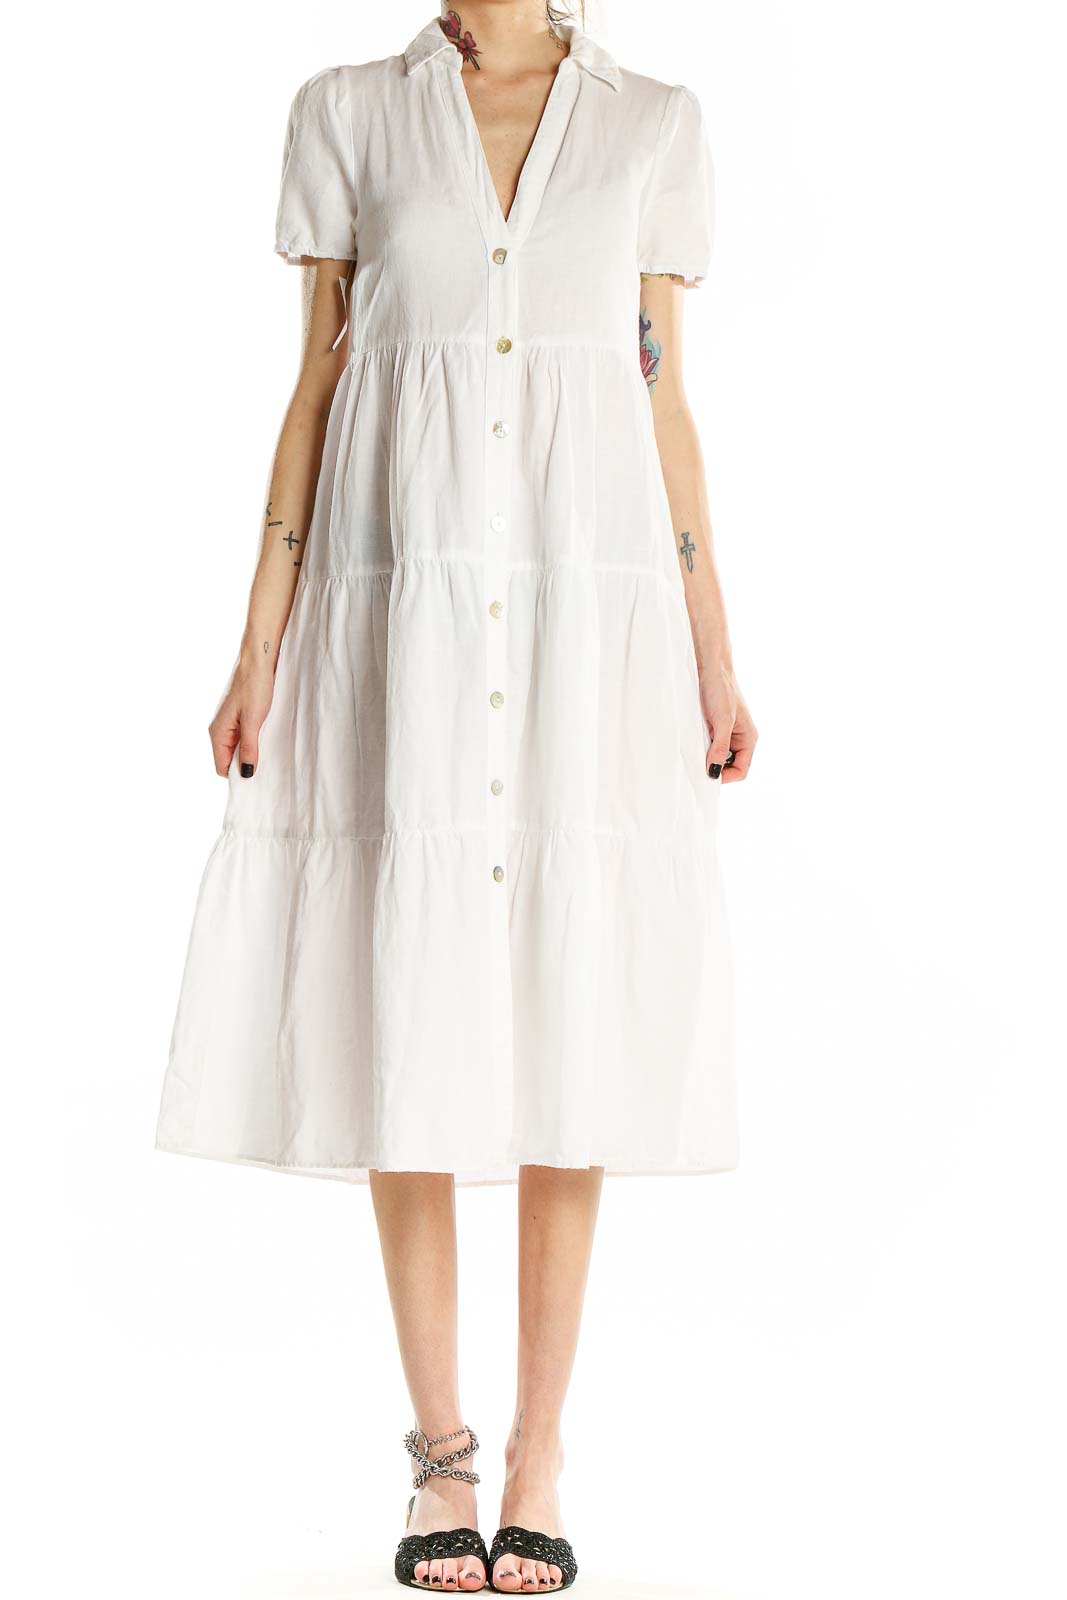 White Flare Short Sleeve Dress Front